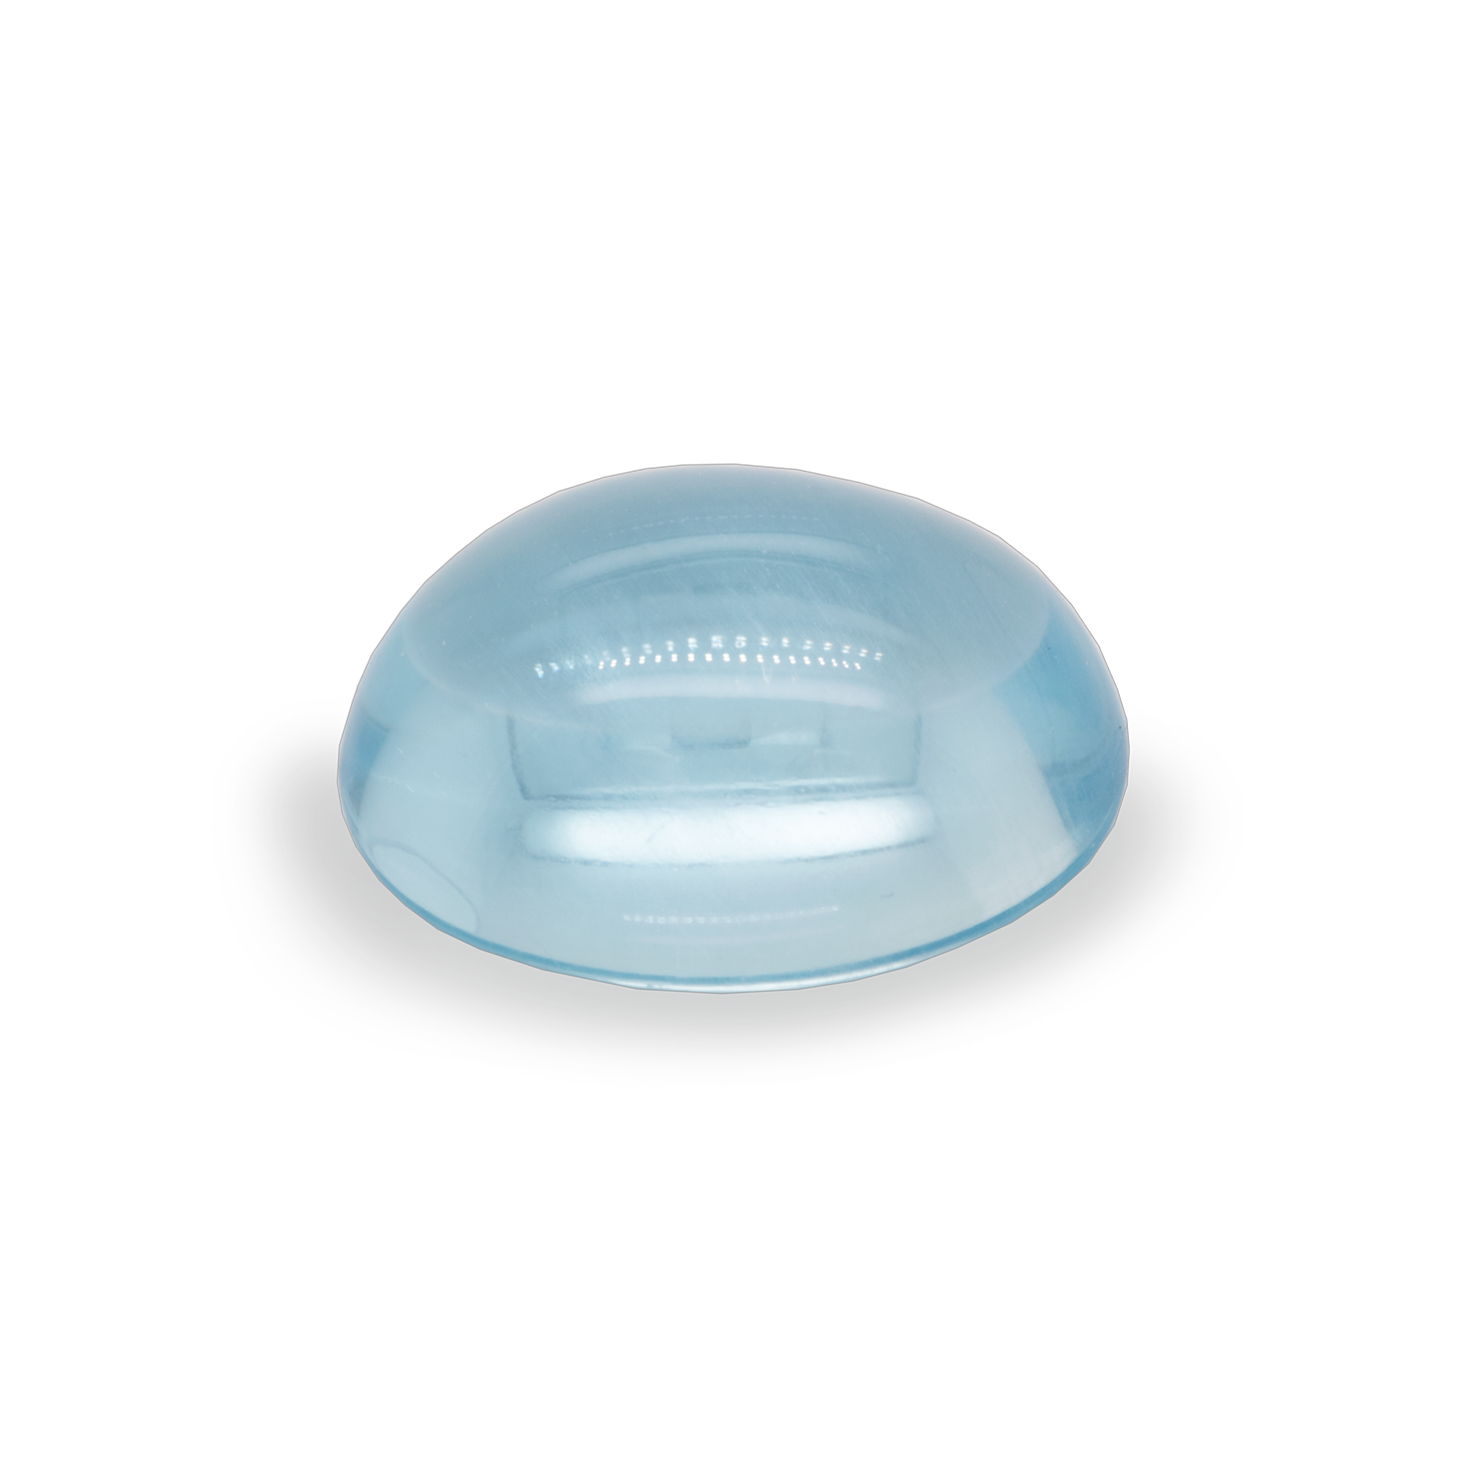 Aquamarine - A, oval, 10x8 mm, 2.68 cts, No. A53001